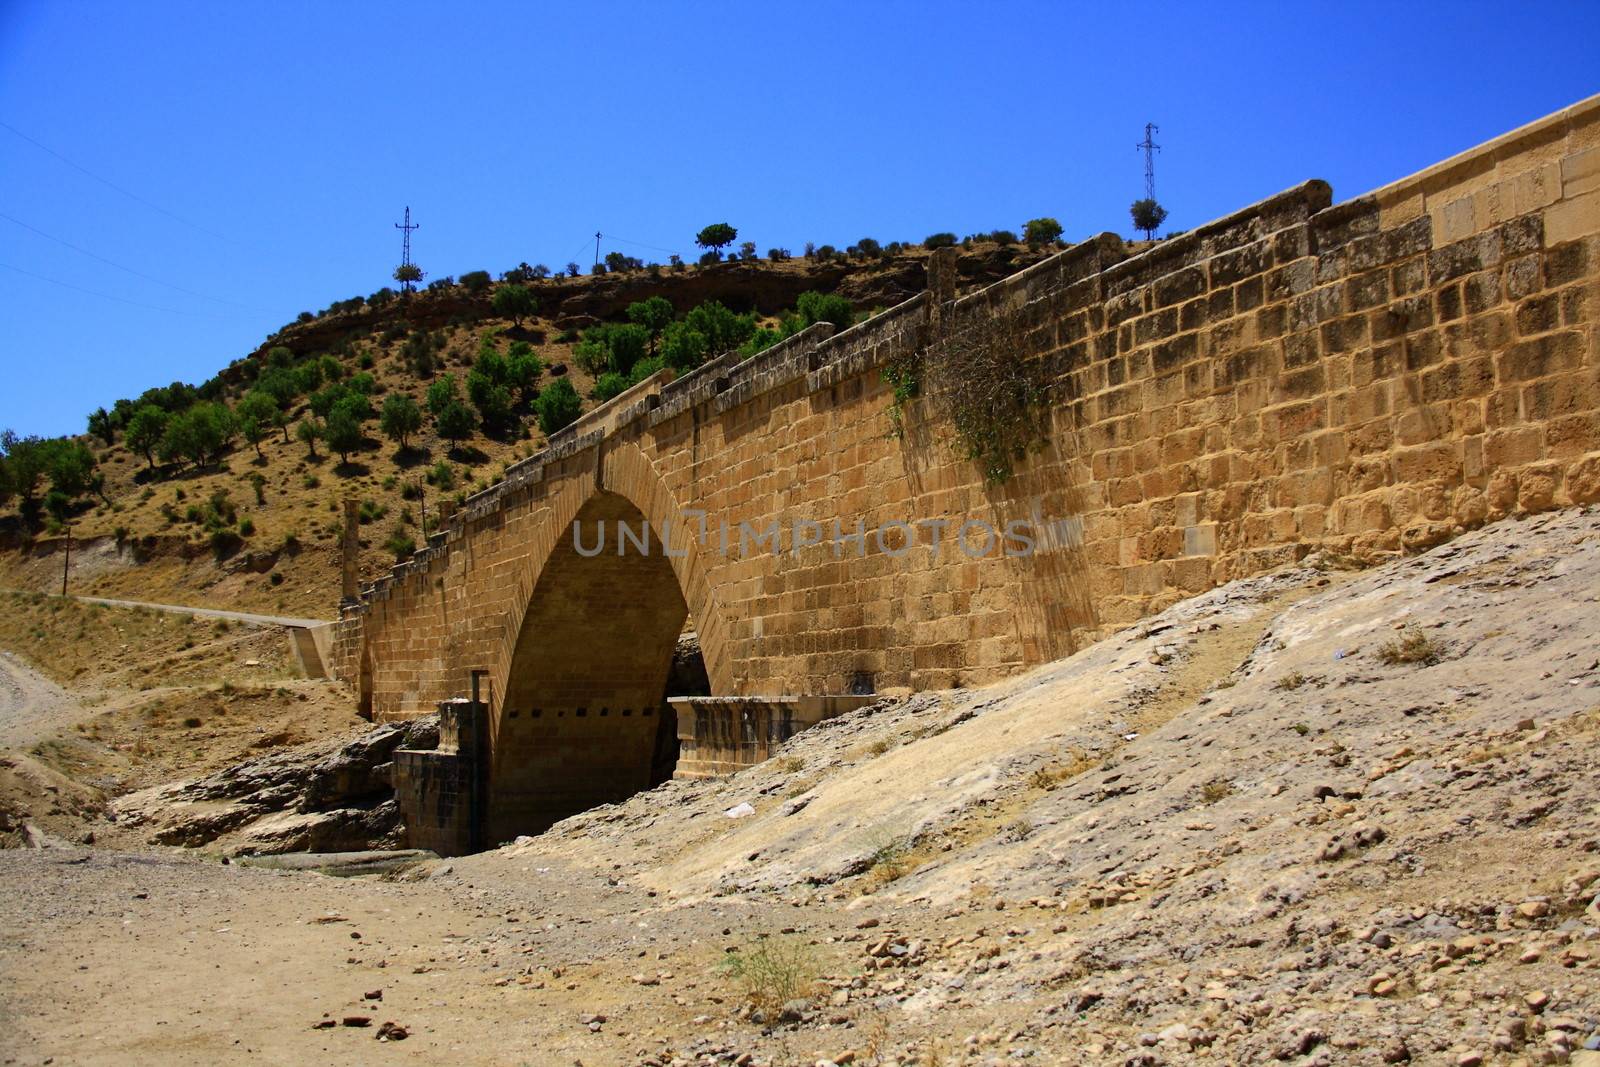 Cendere bridge in Turkey by mturhanlar